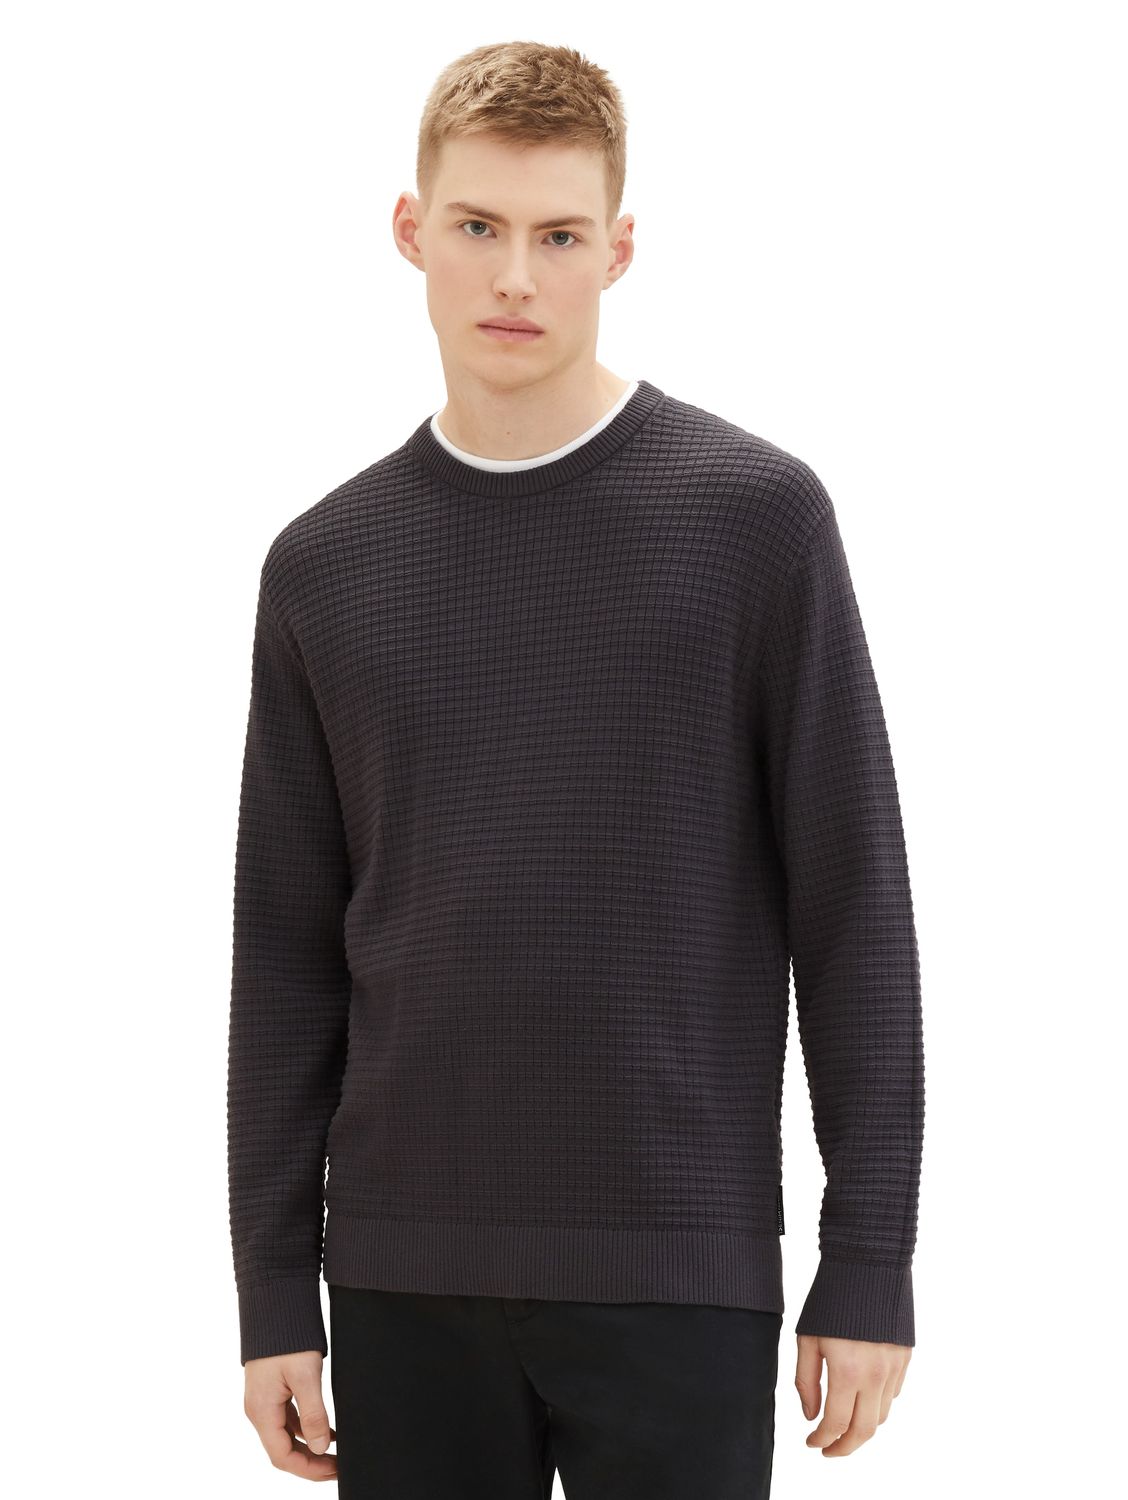 Пуловер TOM TAILOR Denim STRUCTURED DOUBLELAYER, серый пуловер tom tailor denim basic серый